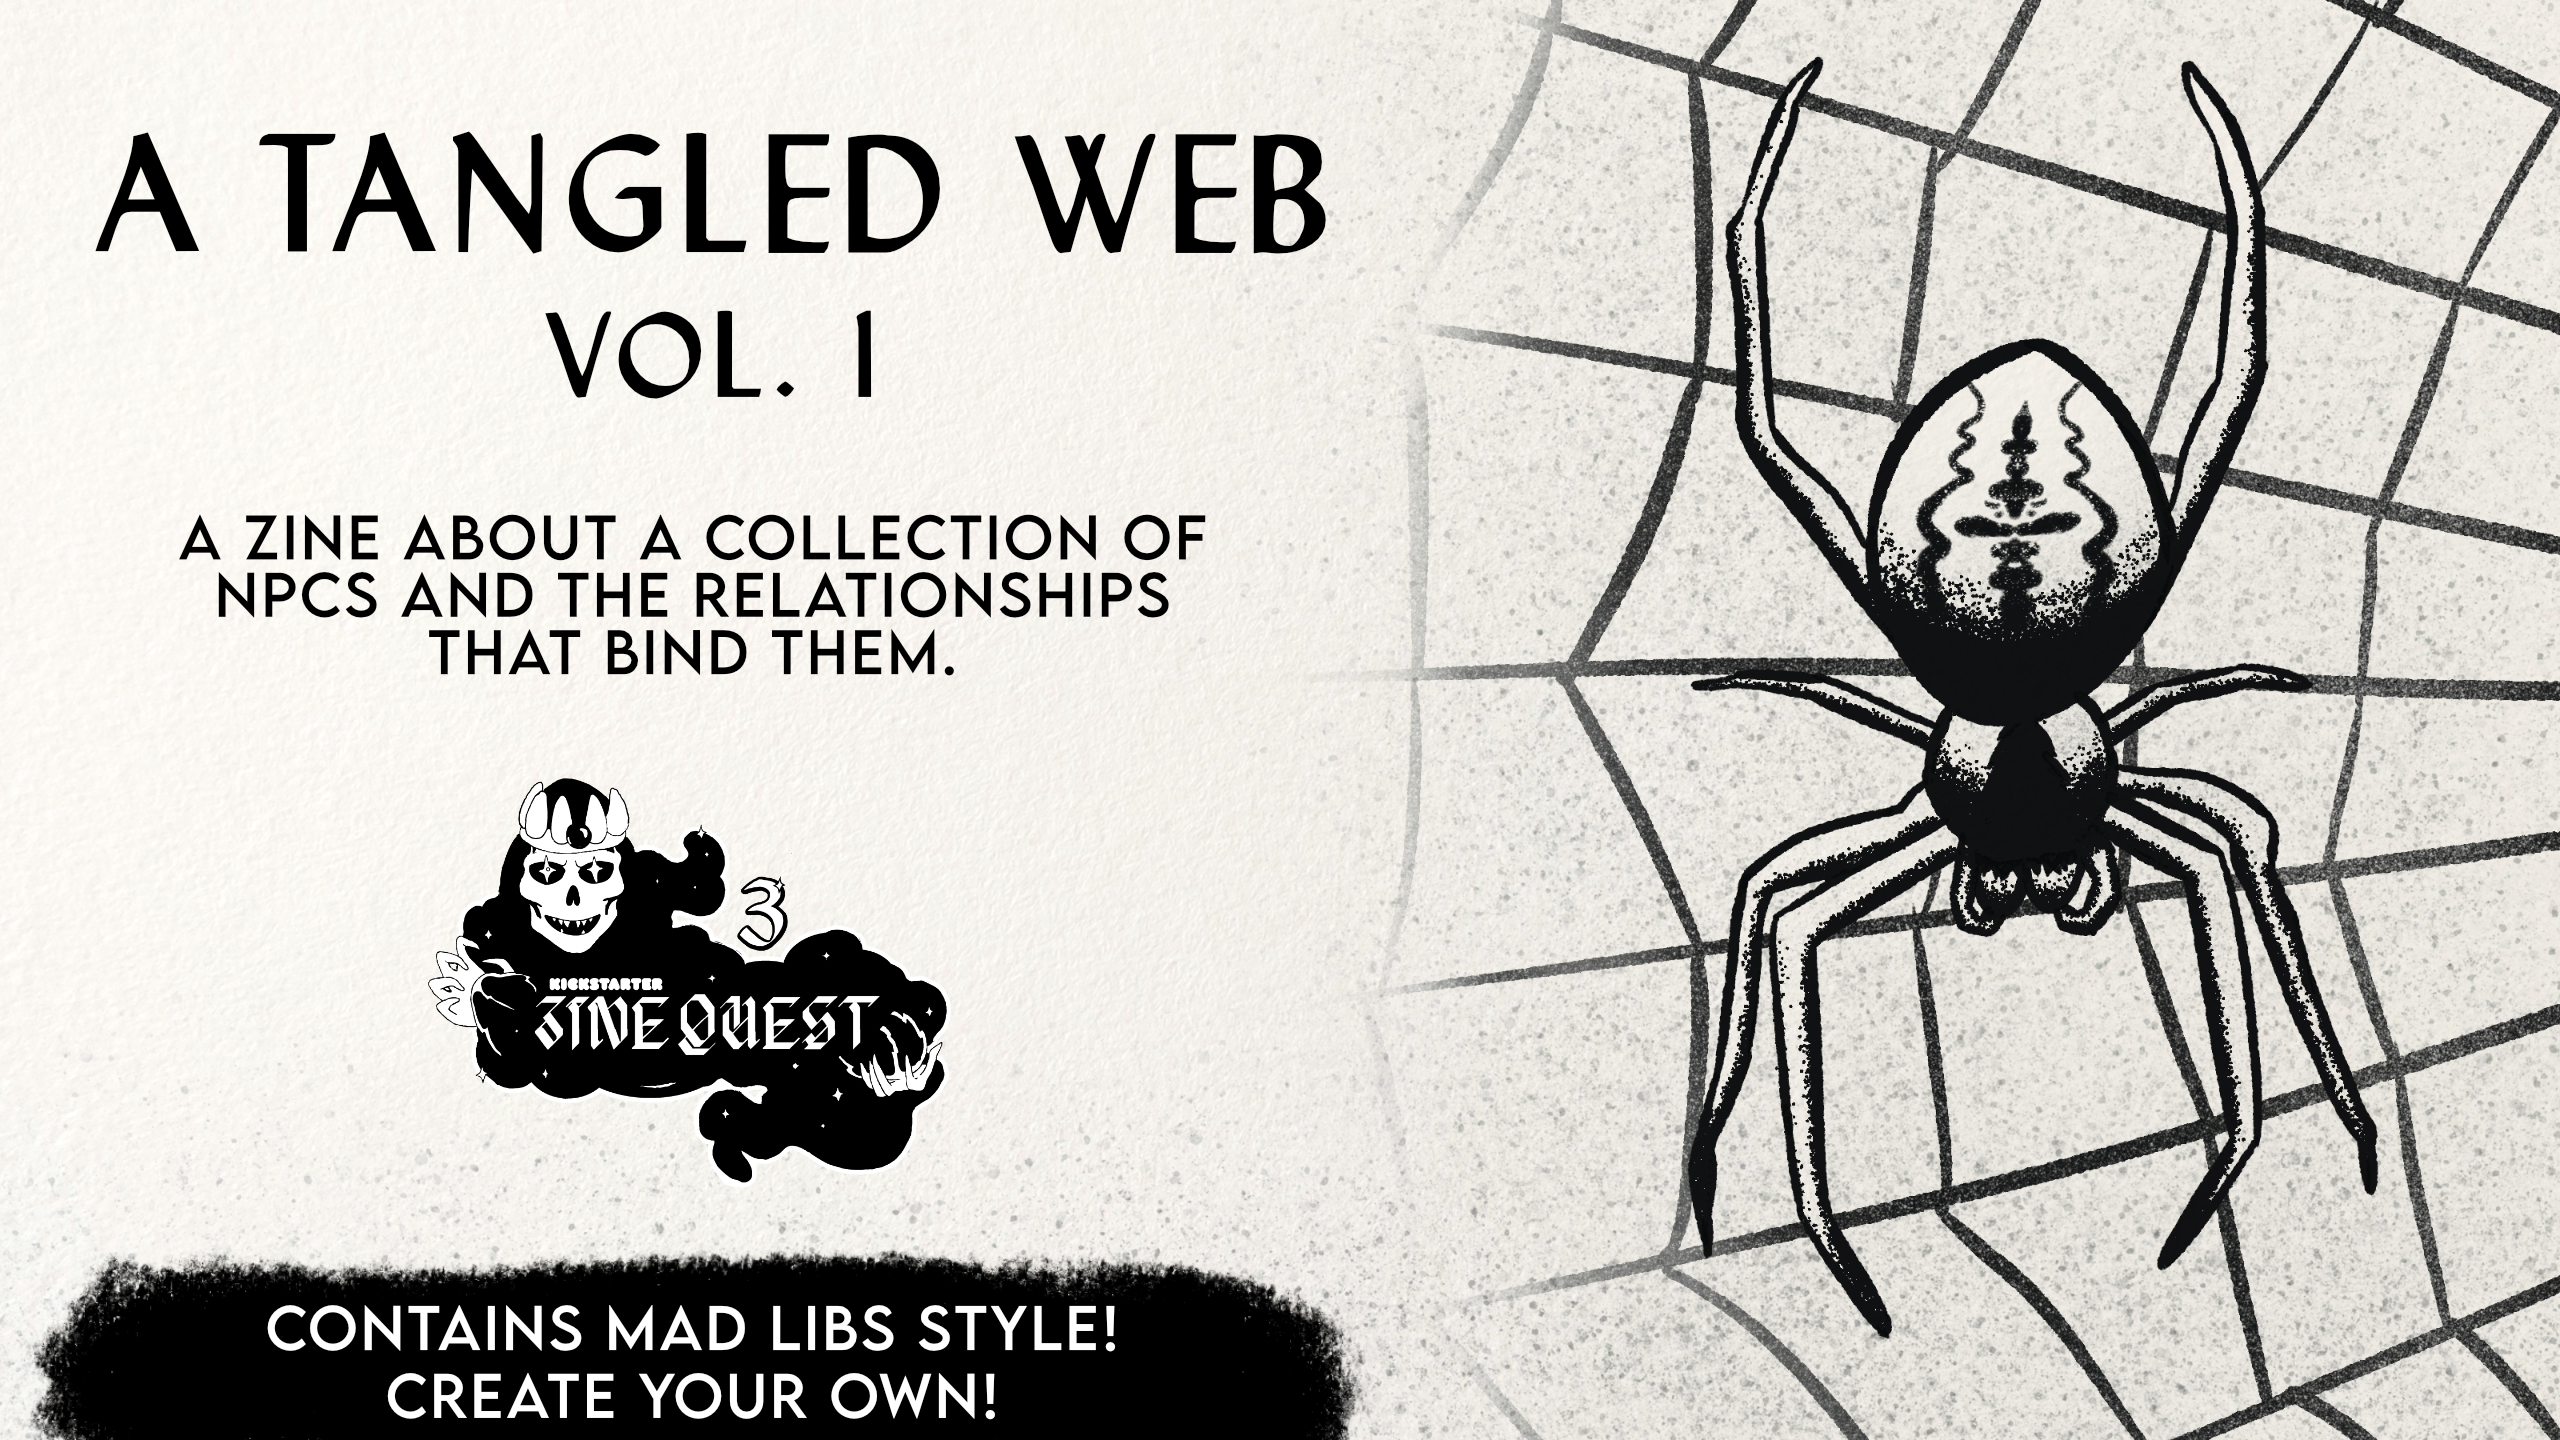 A Tangled Web Vol. 1